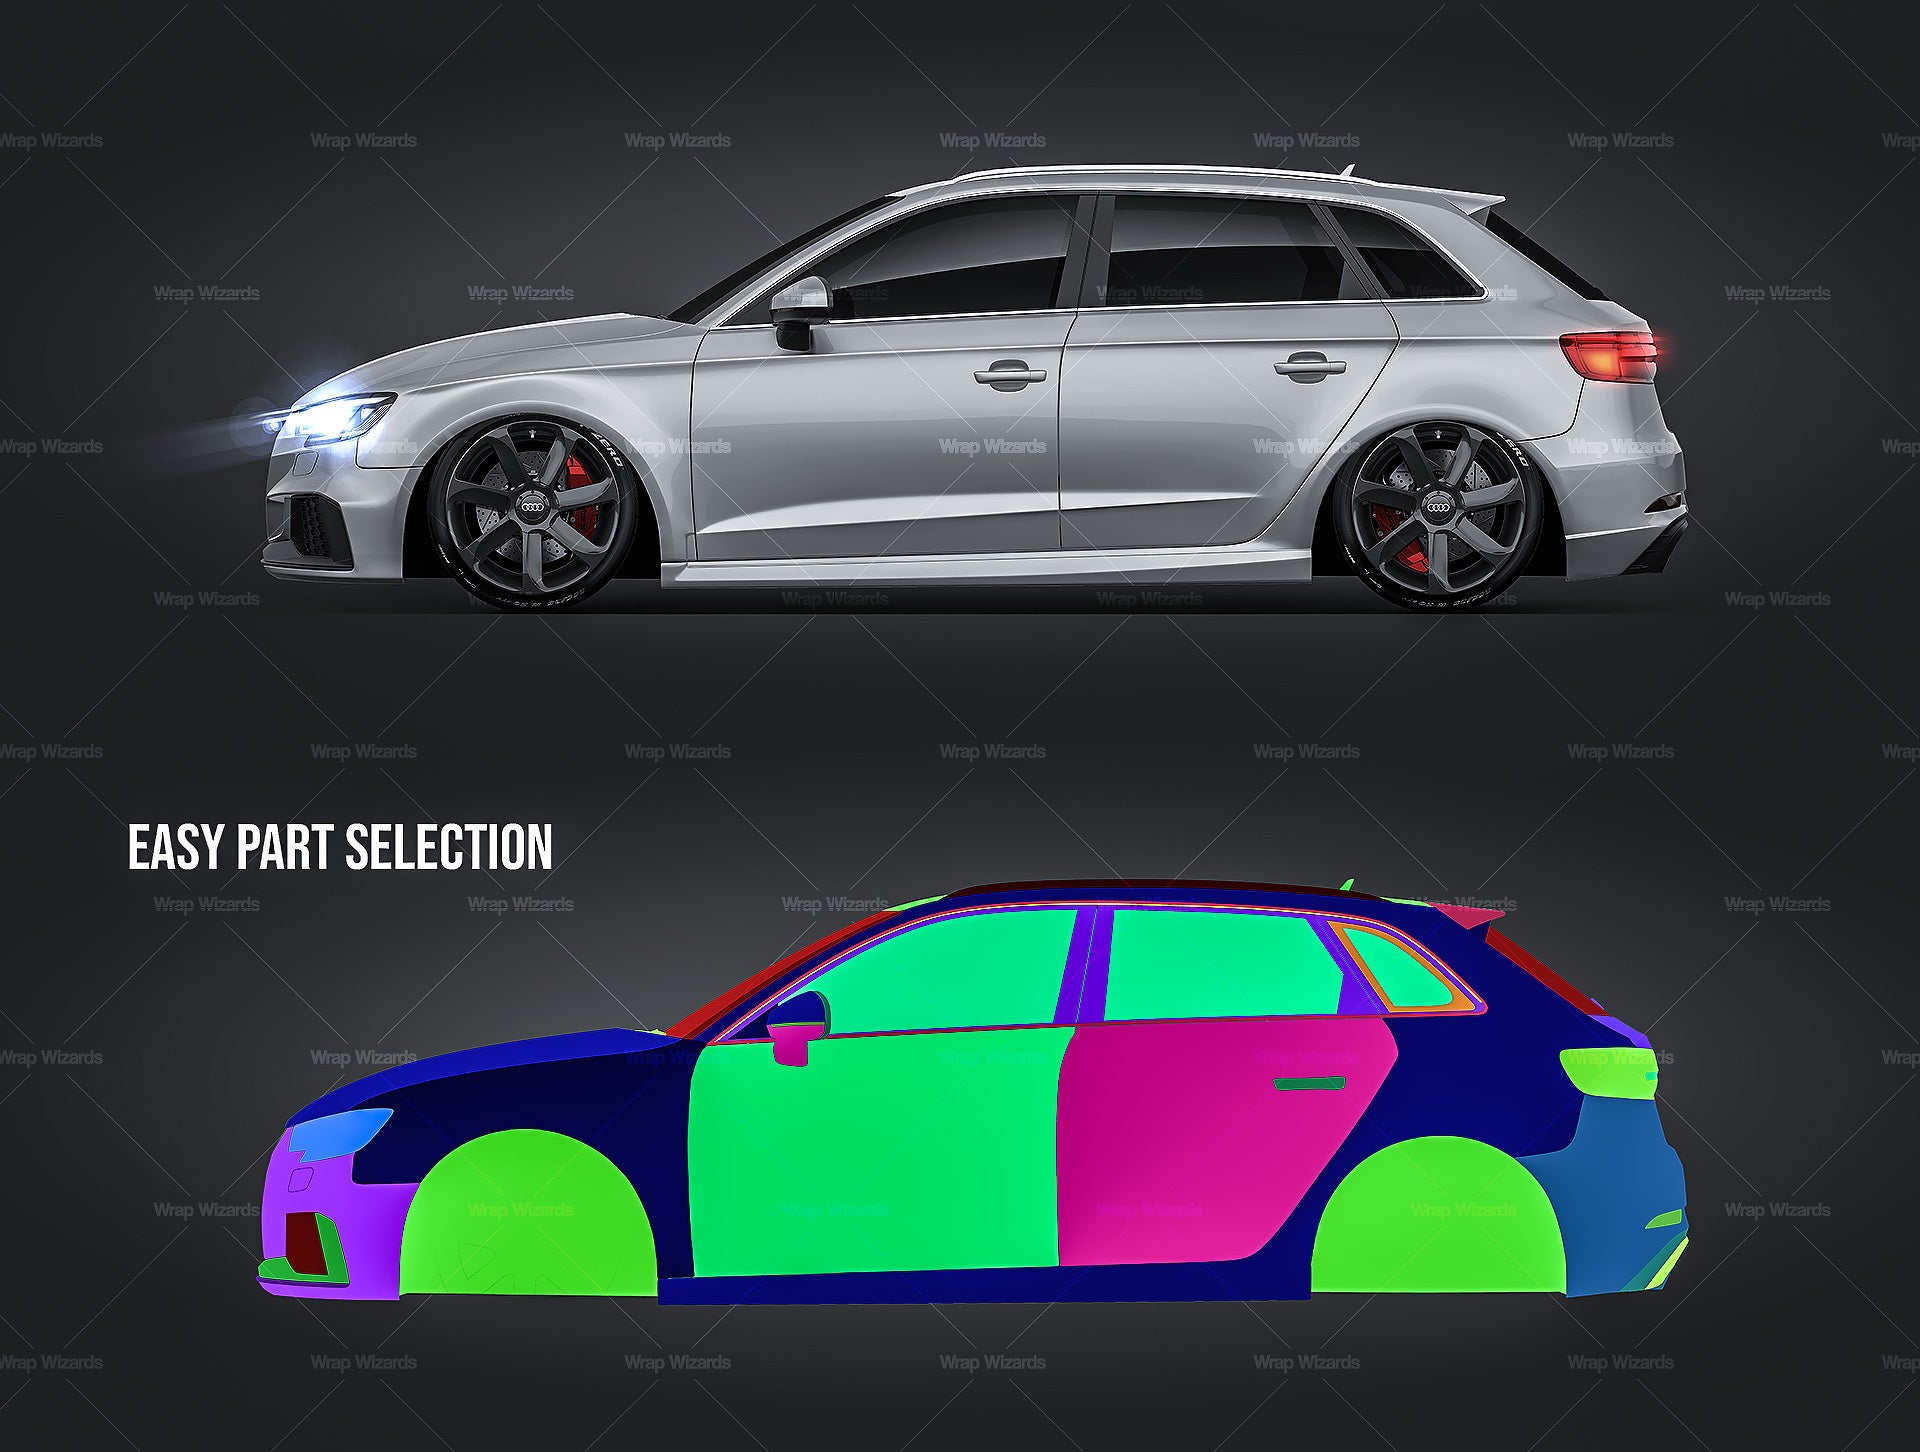 Audi RS3 Sportback 2018 glossy finish - all sides Car Mockup Template.psd